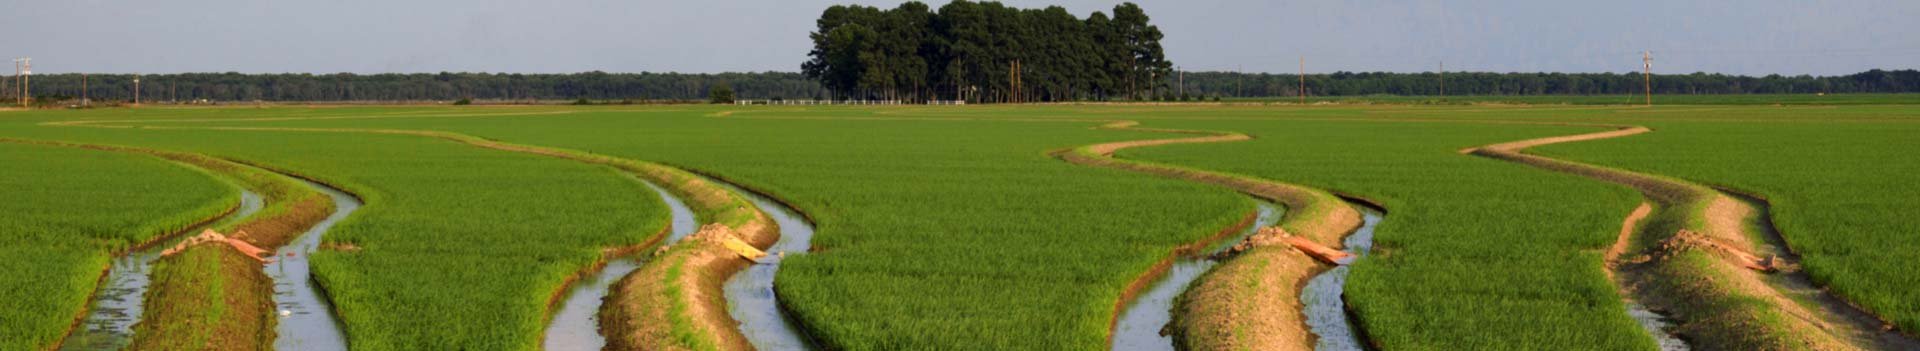 Rice fields of Cross County, Arkansas